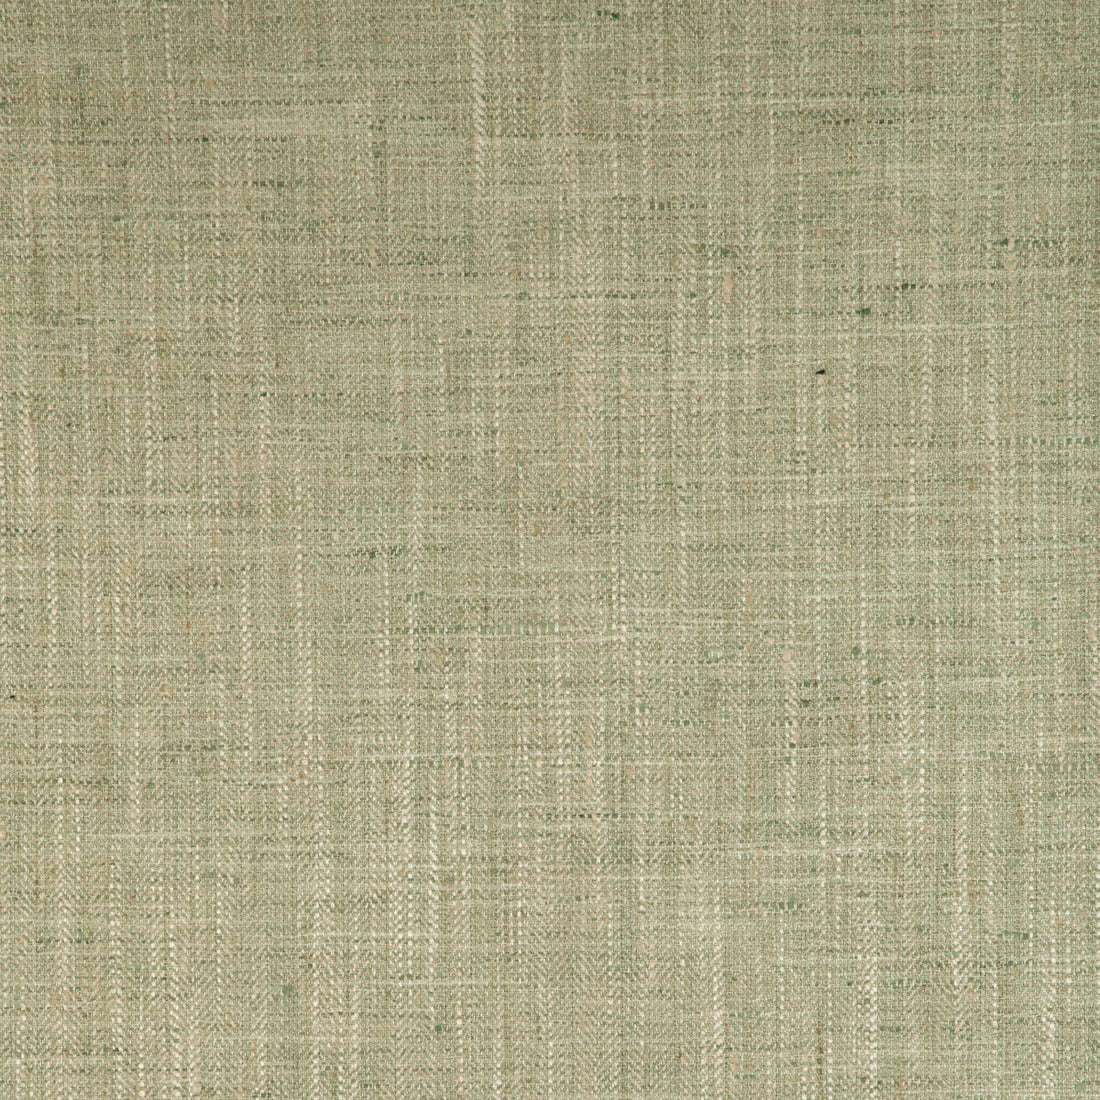 Kravet Smart fabric in 34088-135 color - pattern 34088.135.0 - by Kravet Smart